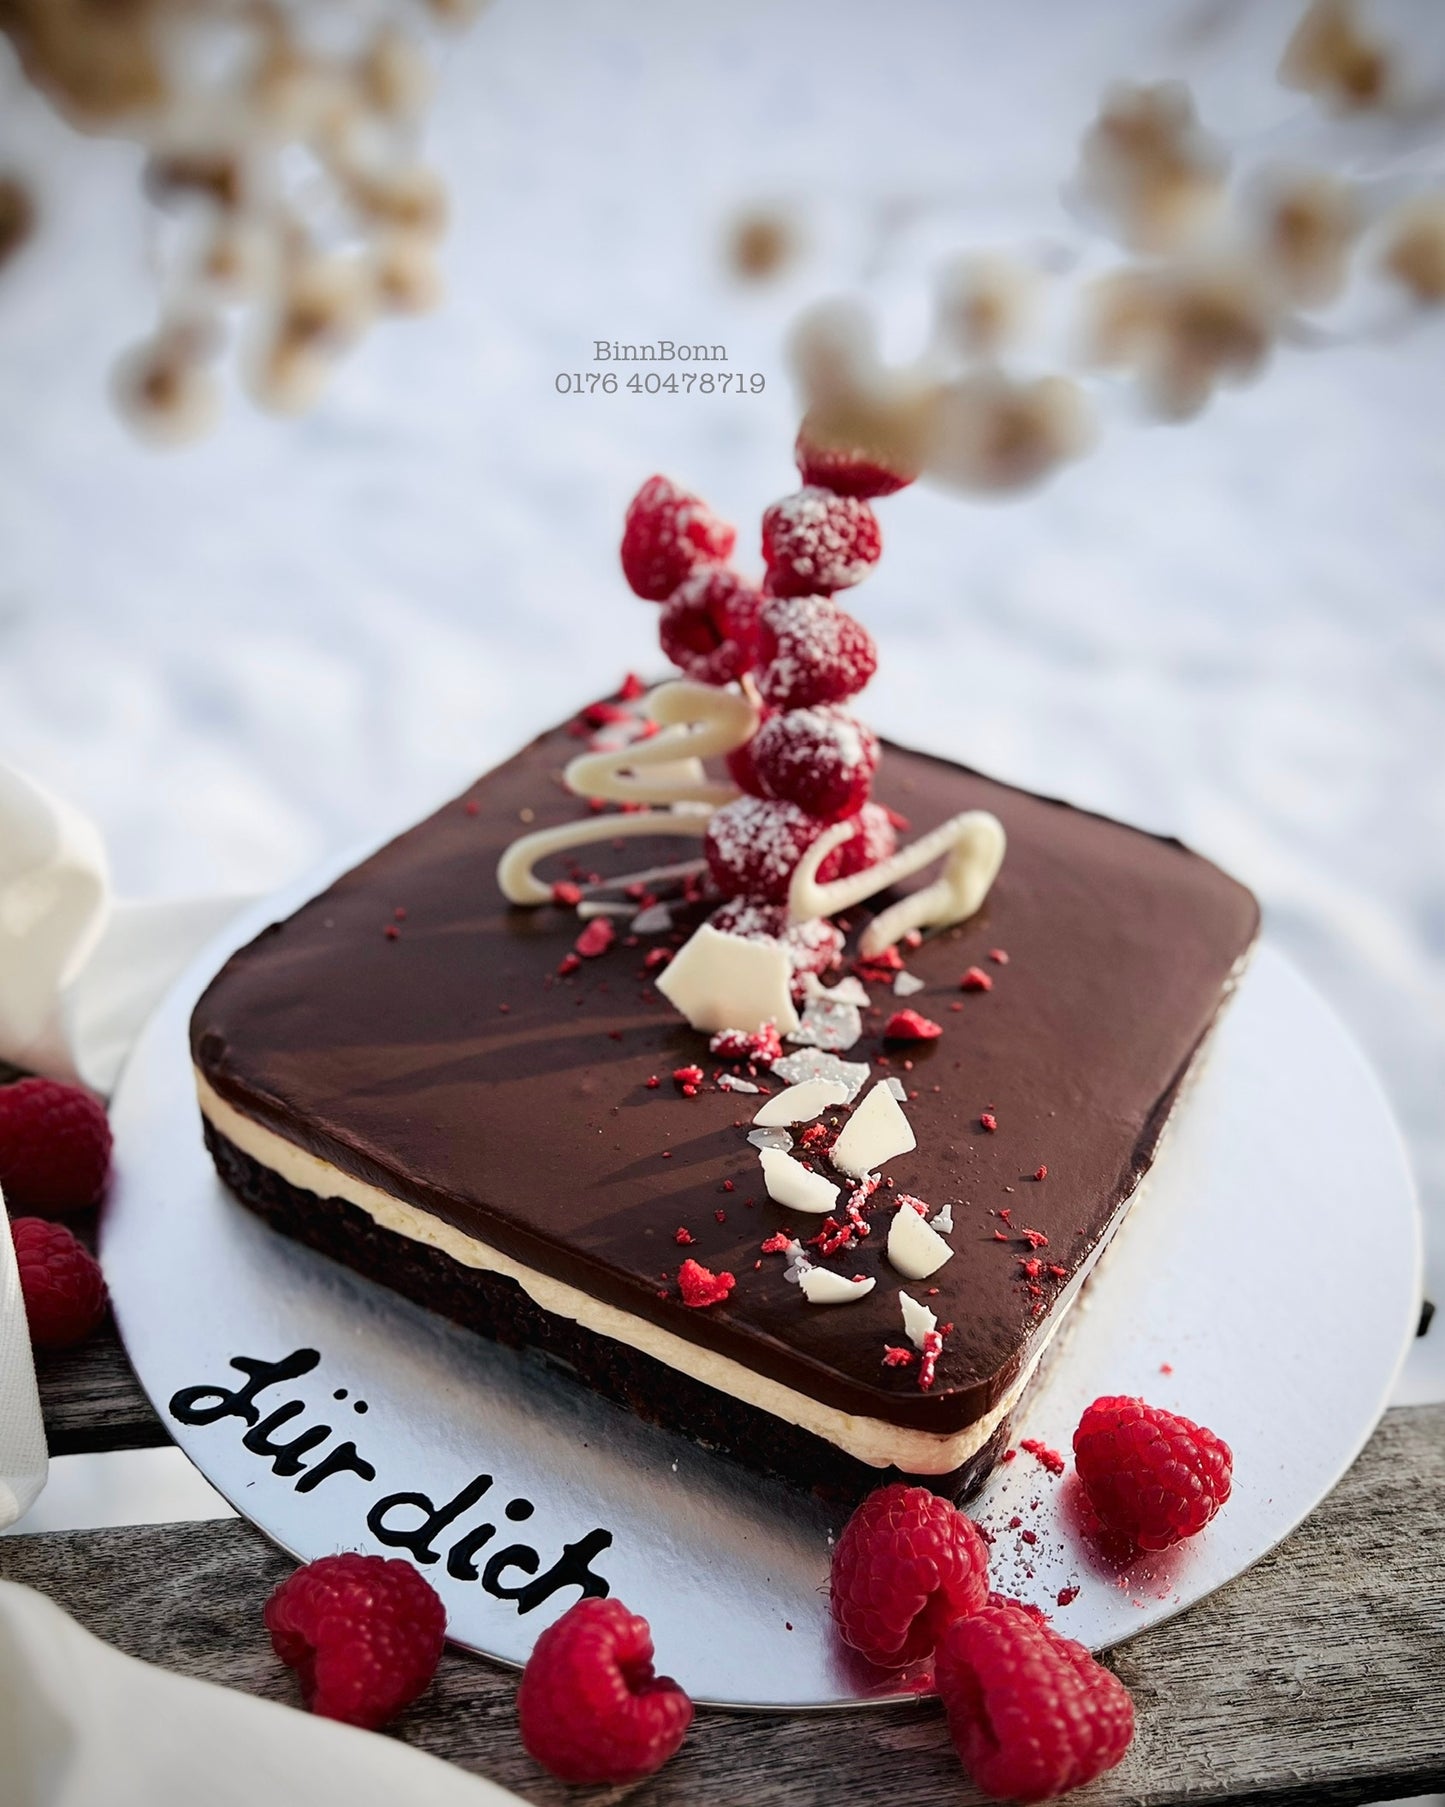 30. Torte "For You" Schokolade Mousse mit frischen Himbeeren 16 cm